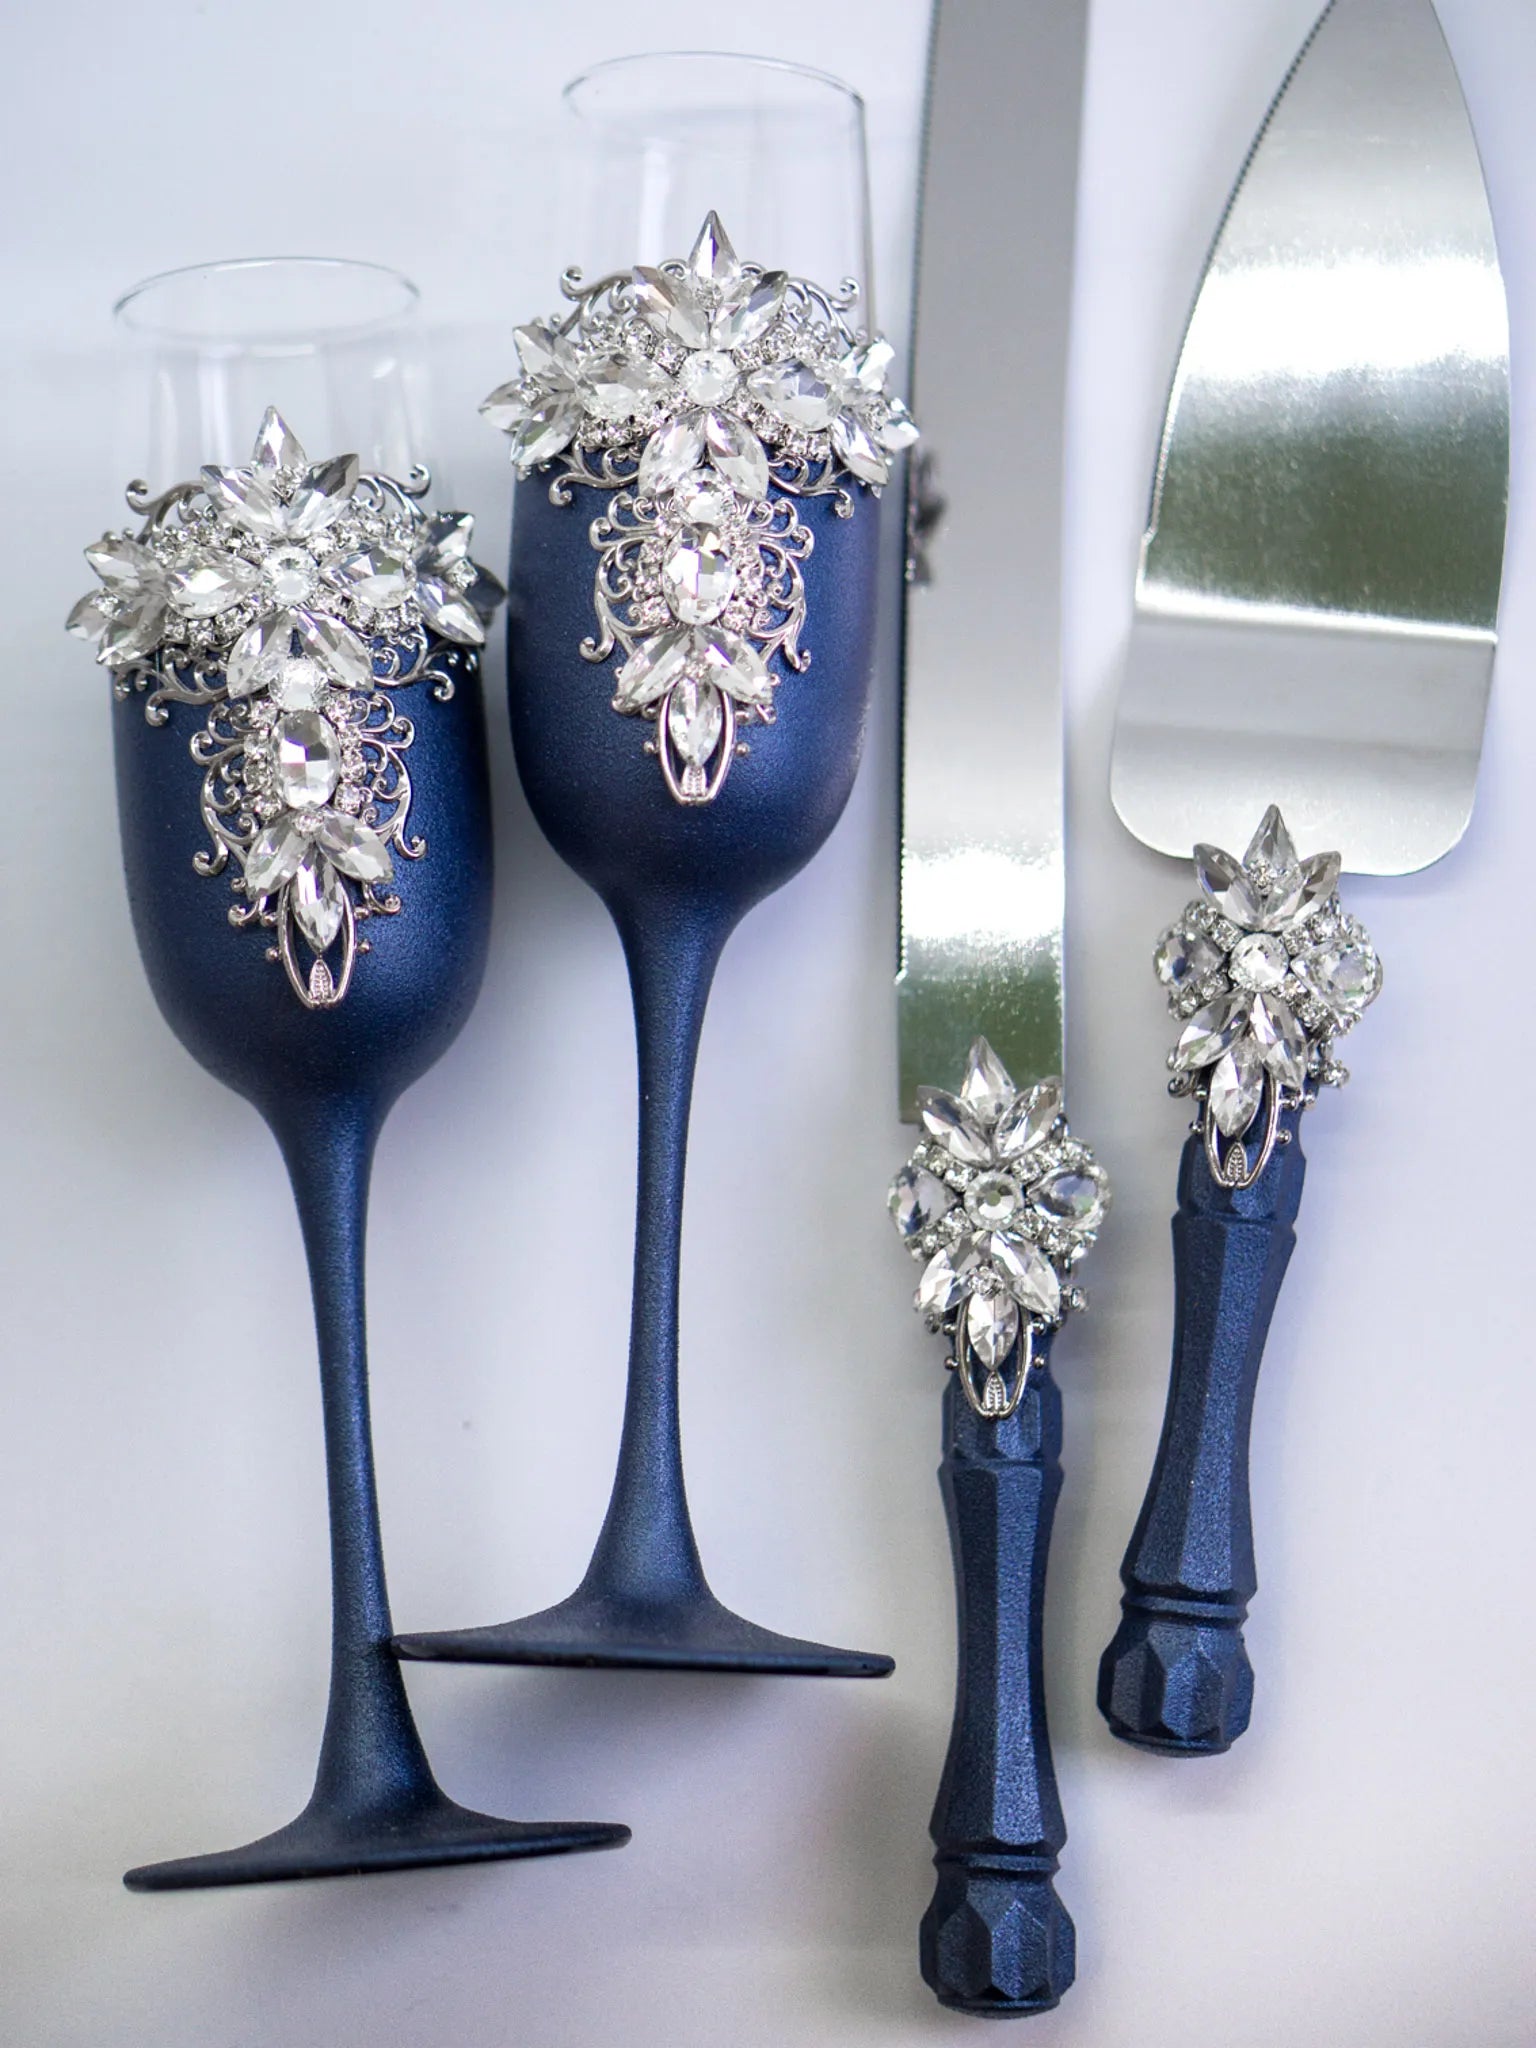 Intricate Navy Blue Filigree Wedding Toast Glasses and Cake Set